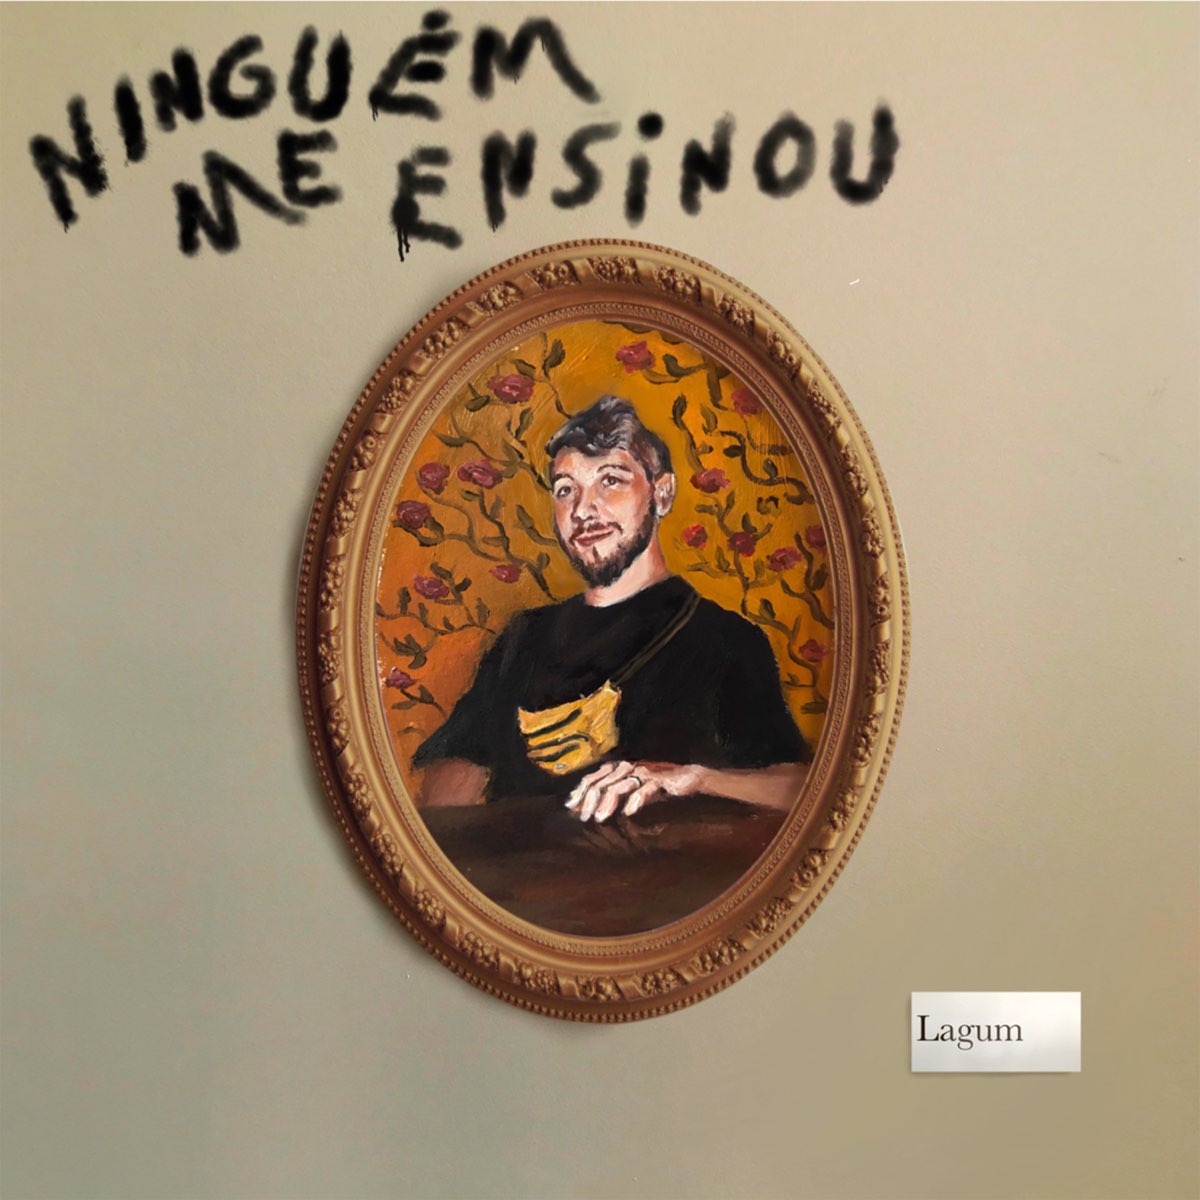 Lagum NINGUÉM ME ENSINOU cover artwork